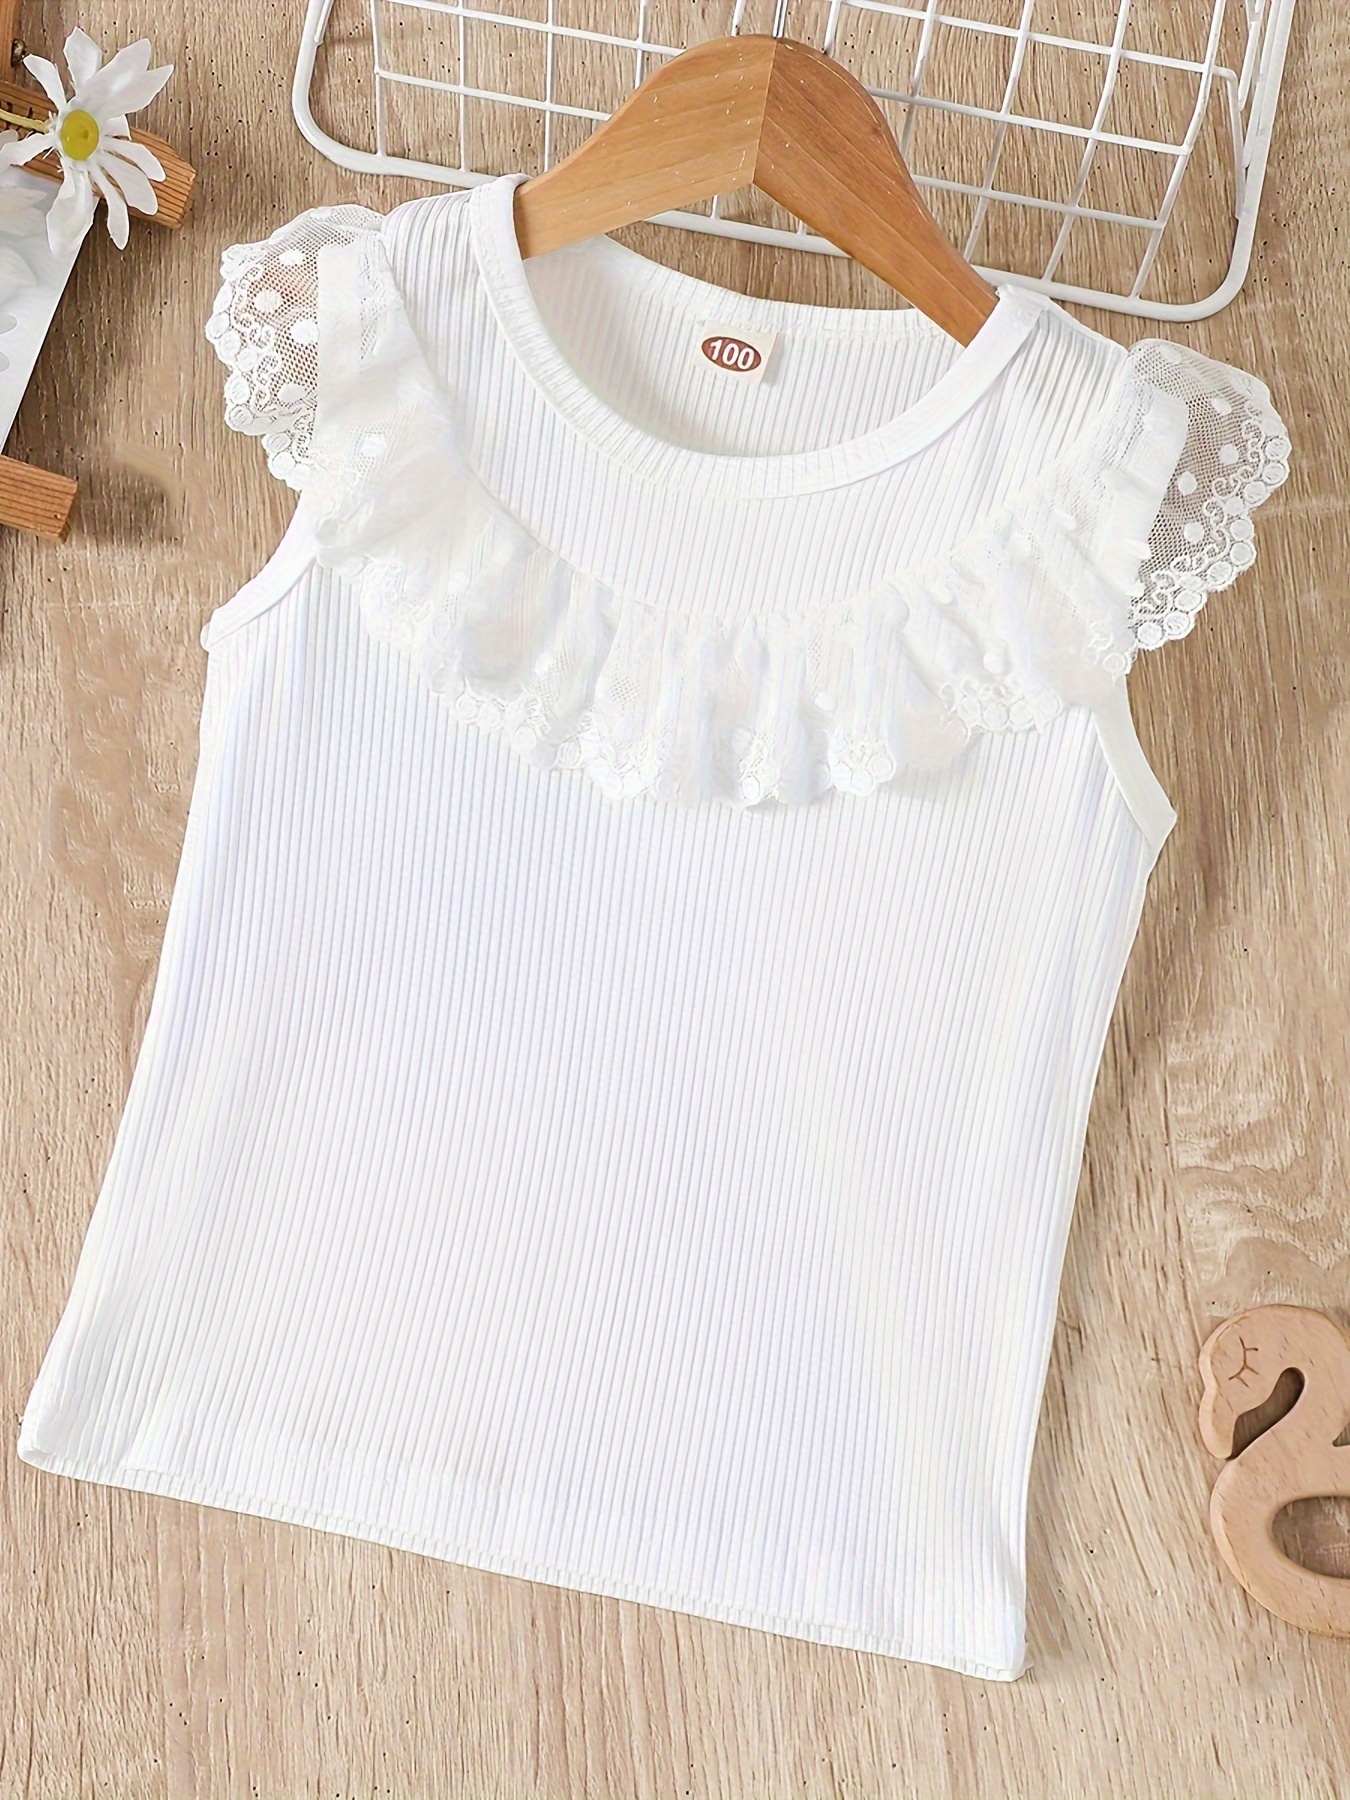 T-shirt For Girls Summer Teens Crop Tops Pearl Lace Short Tee